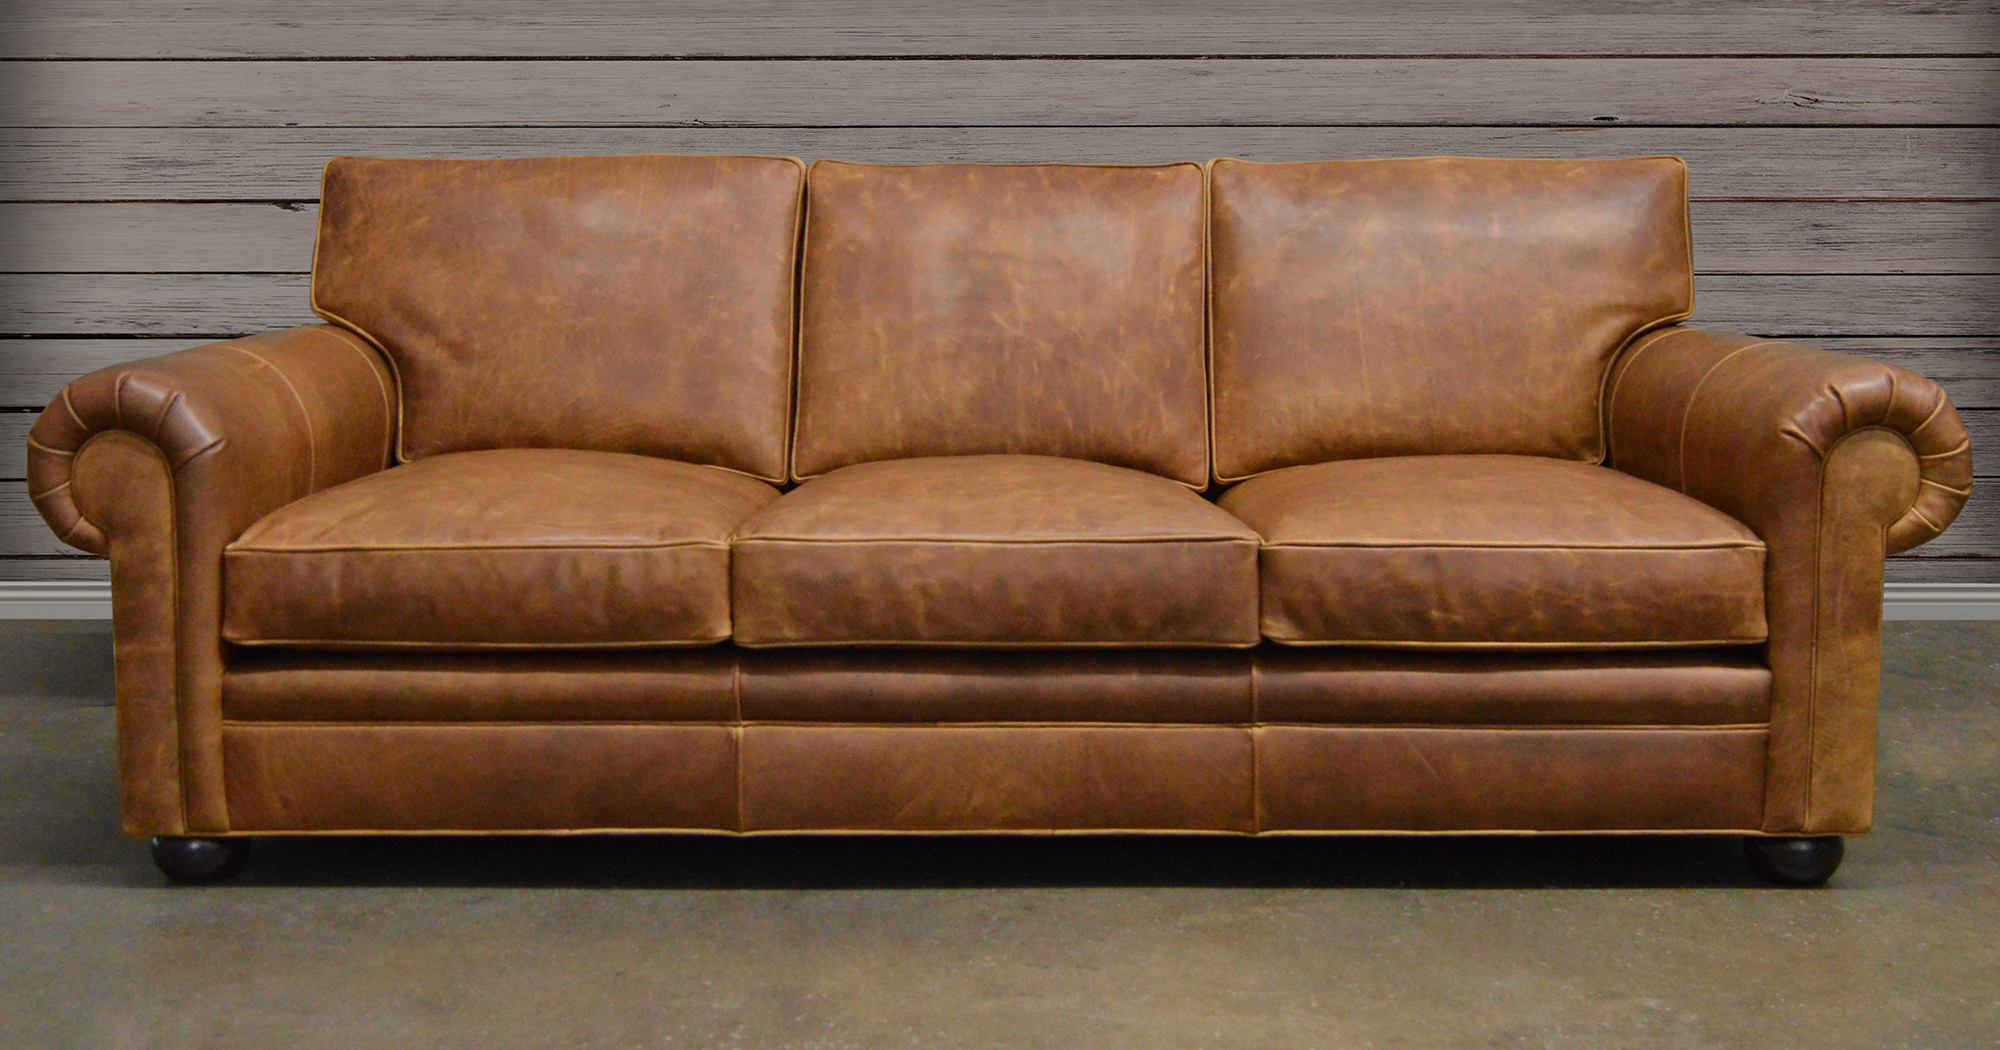 Full Grain Leather Sofa Visualhunt, Is Top Grain Leather Furniture Good